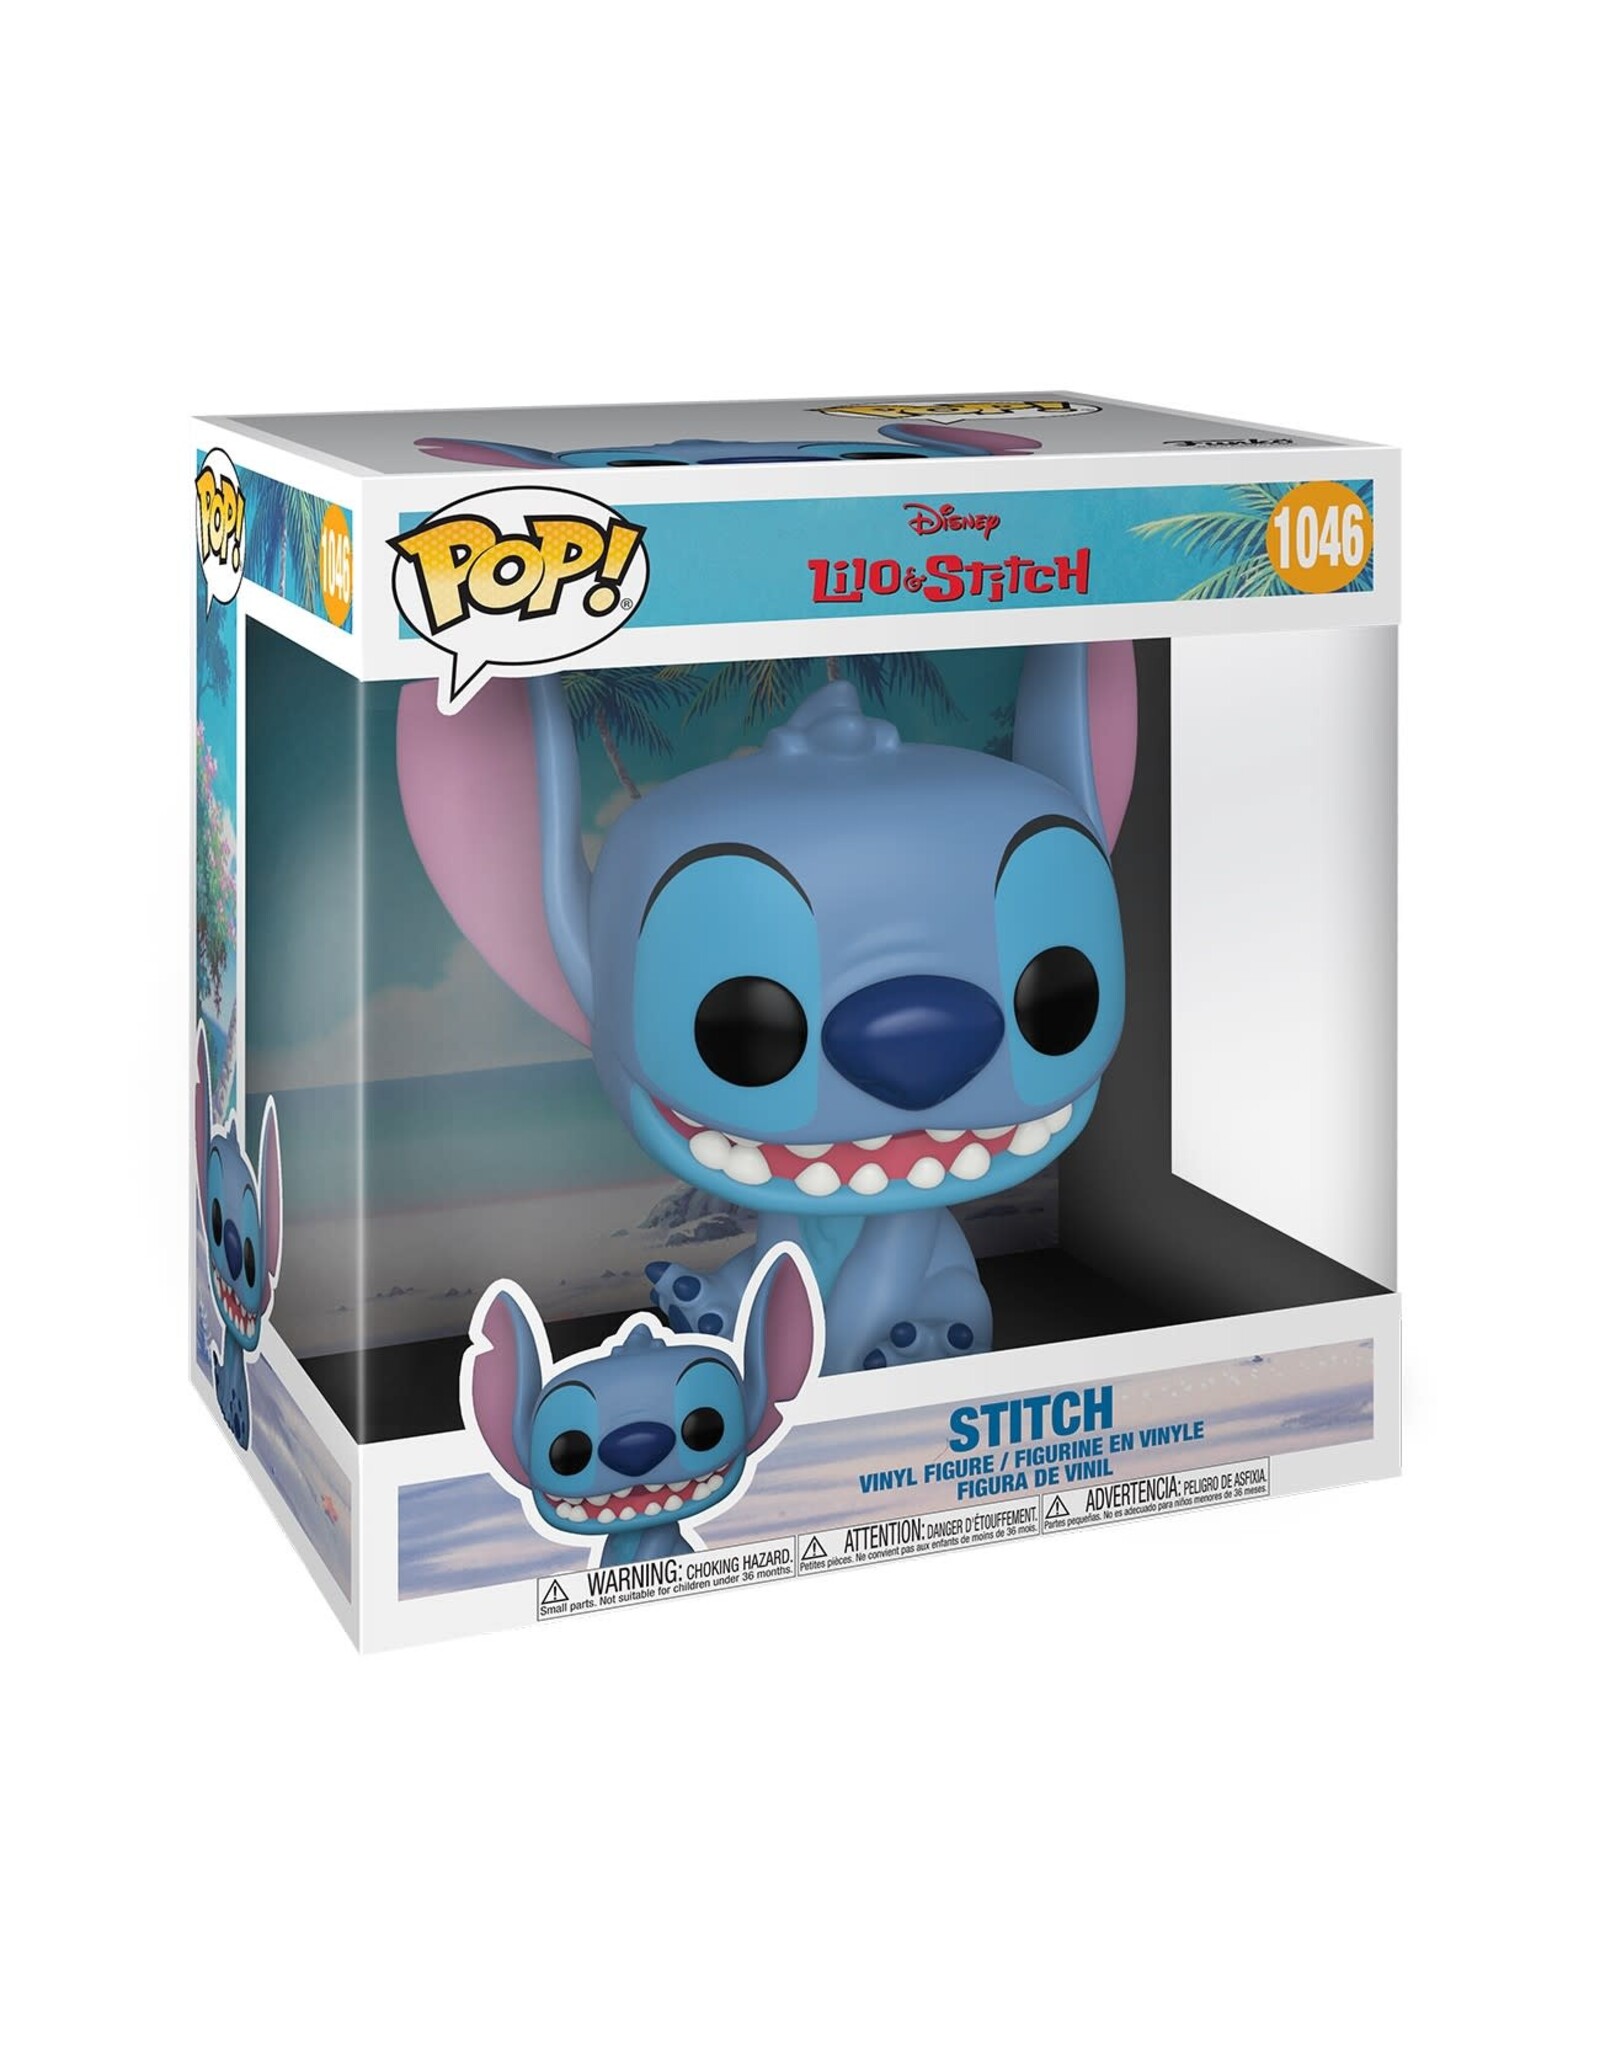 Funko Pop! Funko Pop! Disney nr1046 10 inch Stitch